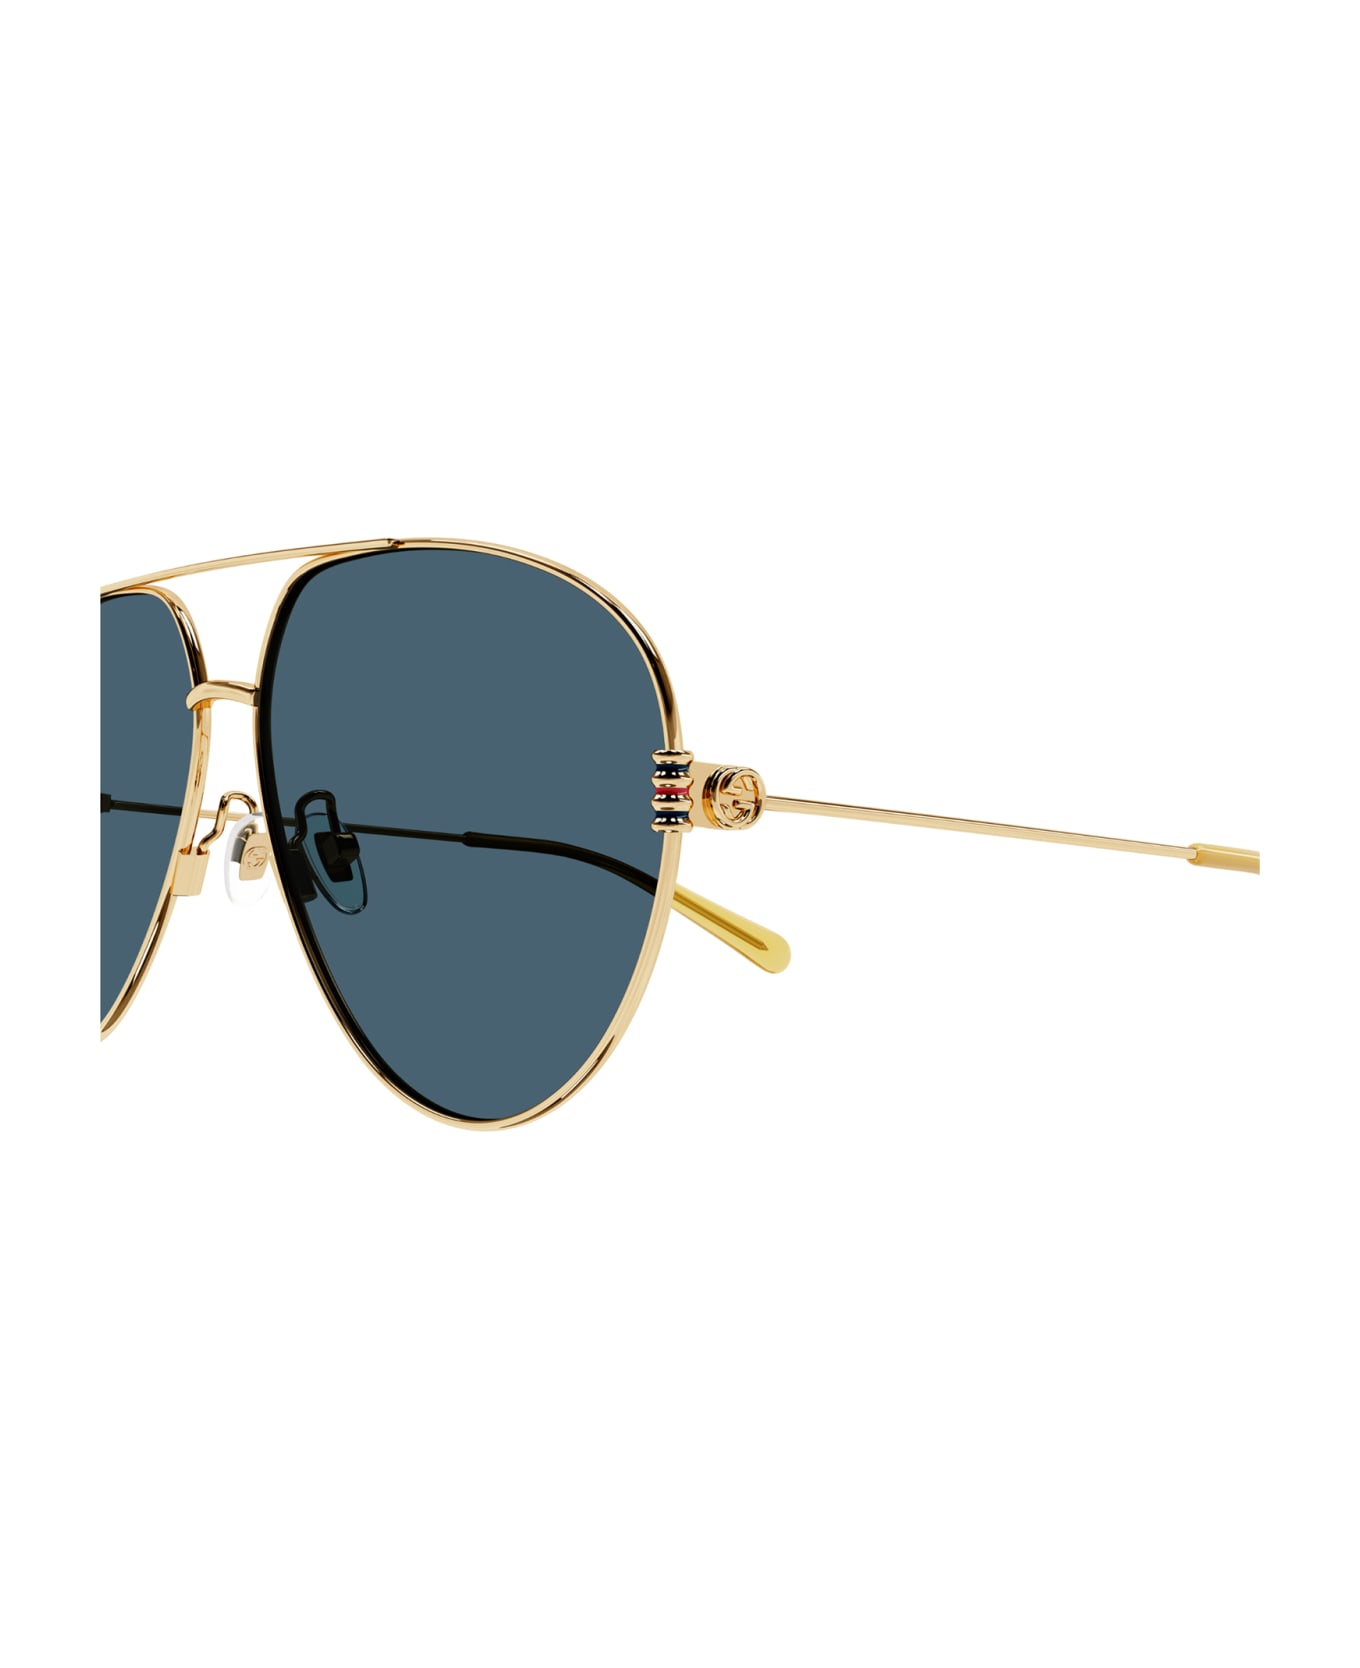 Gucci Eyewear Gg1280s Sunglasses - 003 gold gold blue